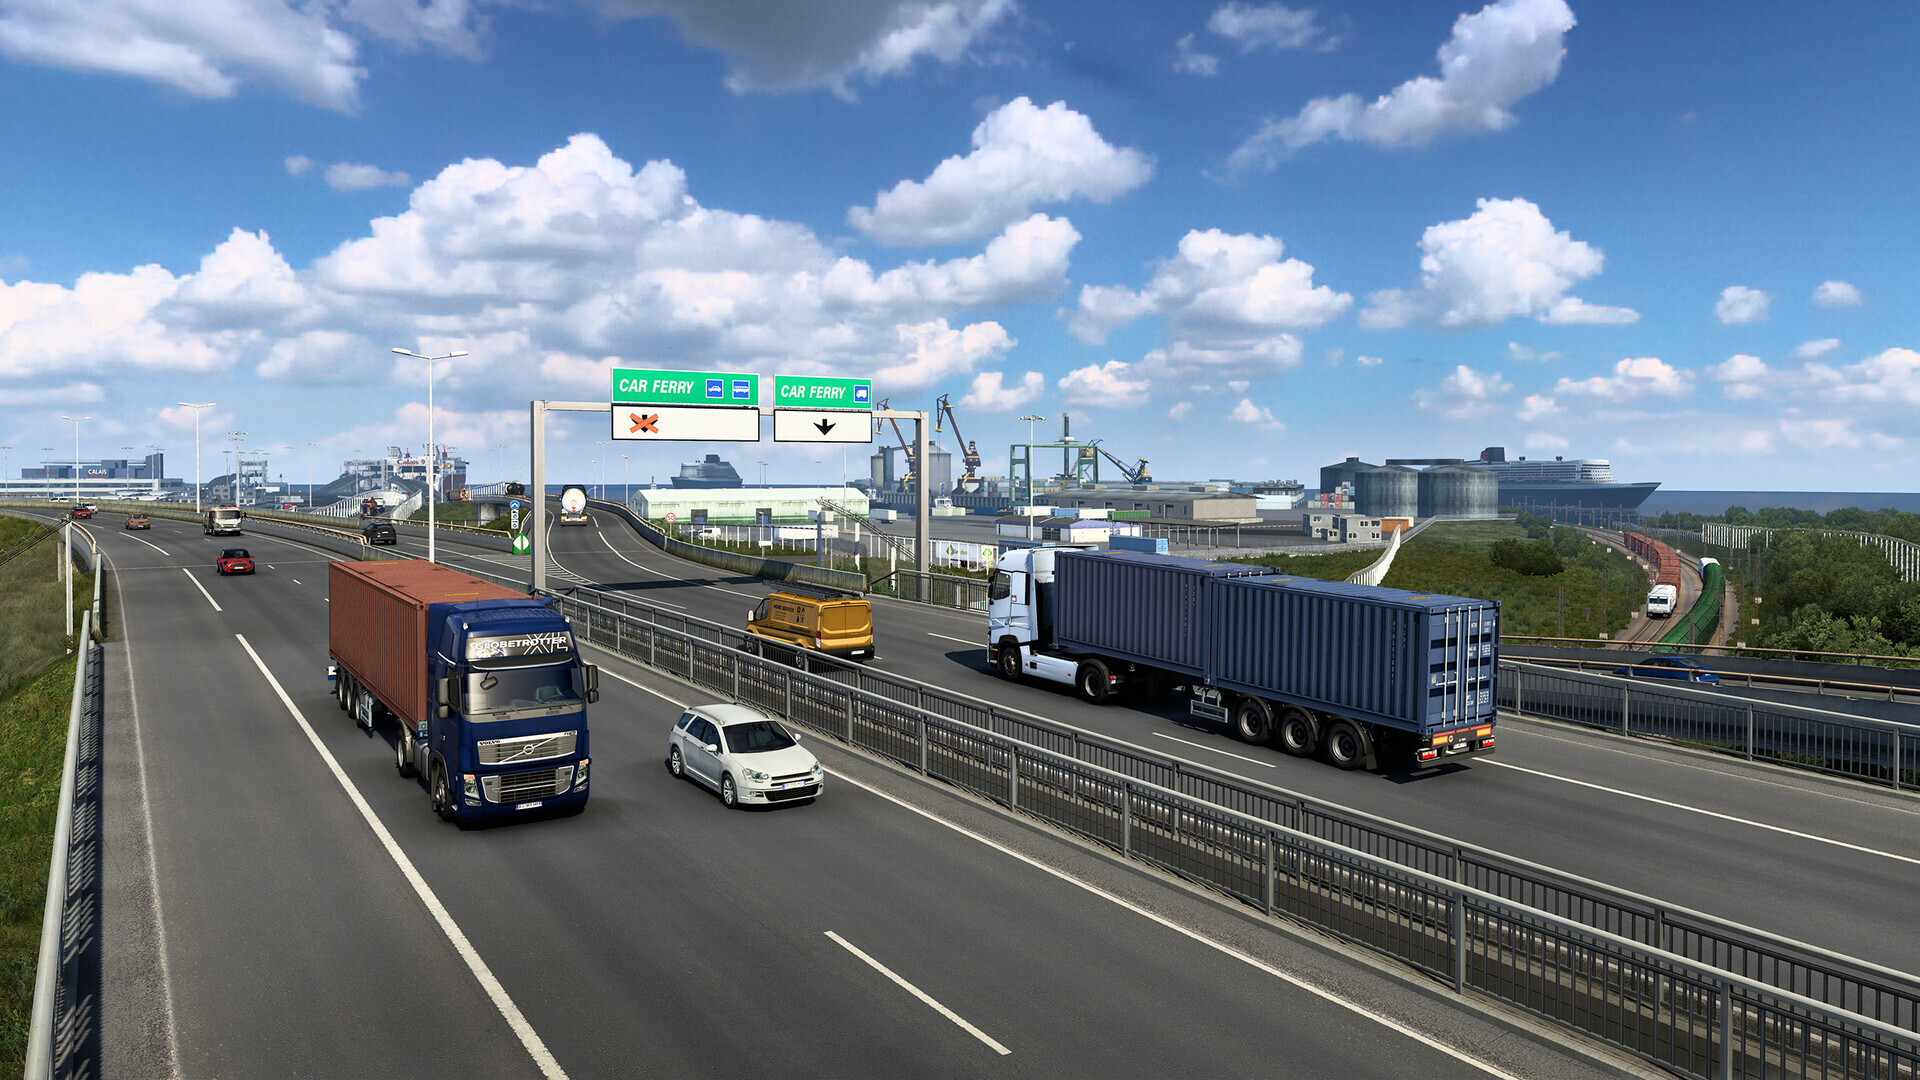 Euro Truck Simulator 2 Gold Edition